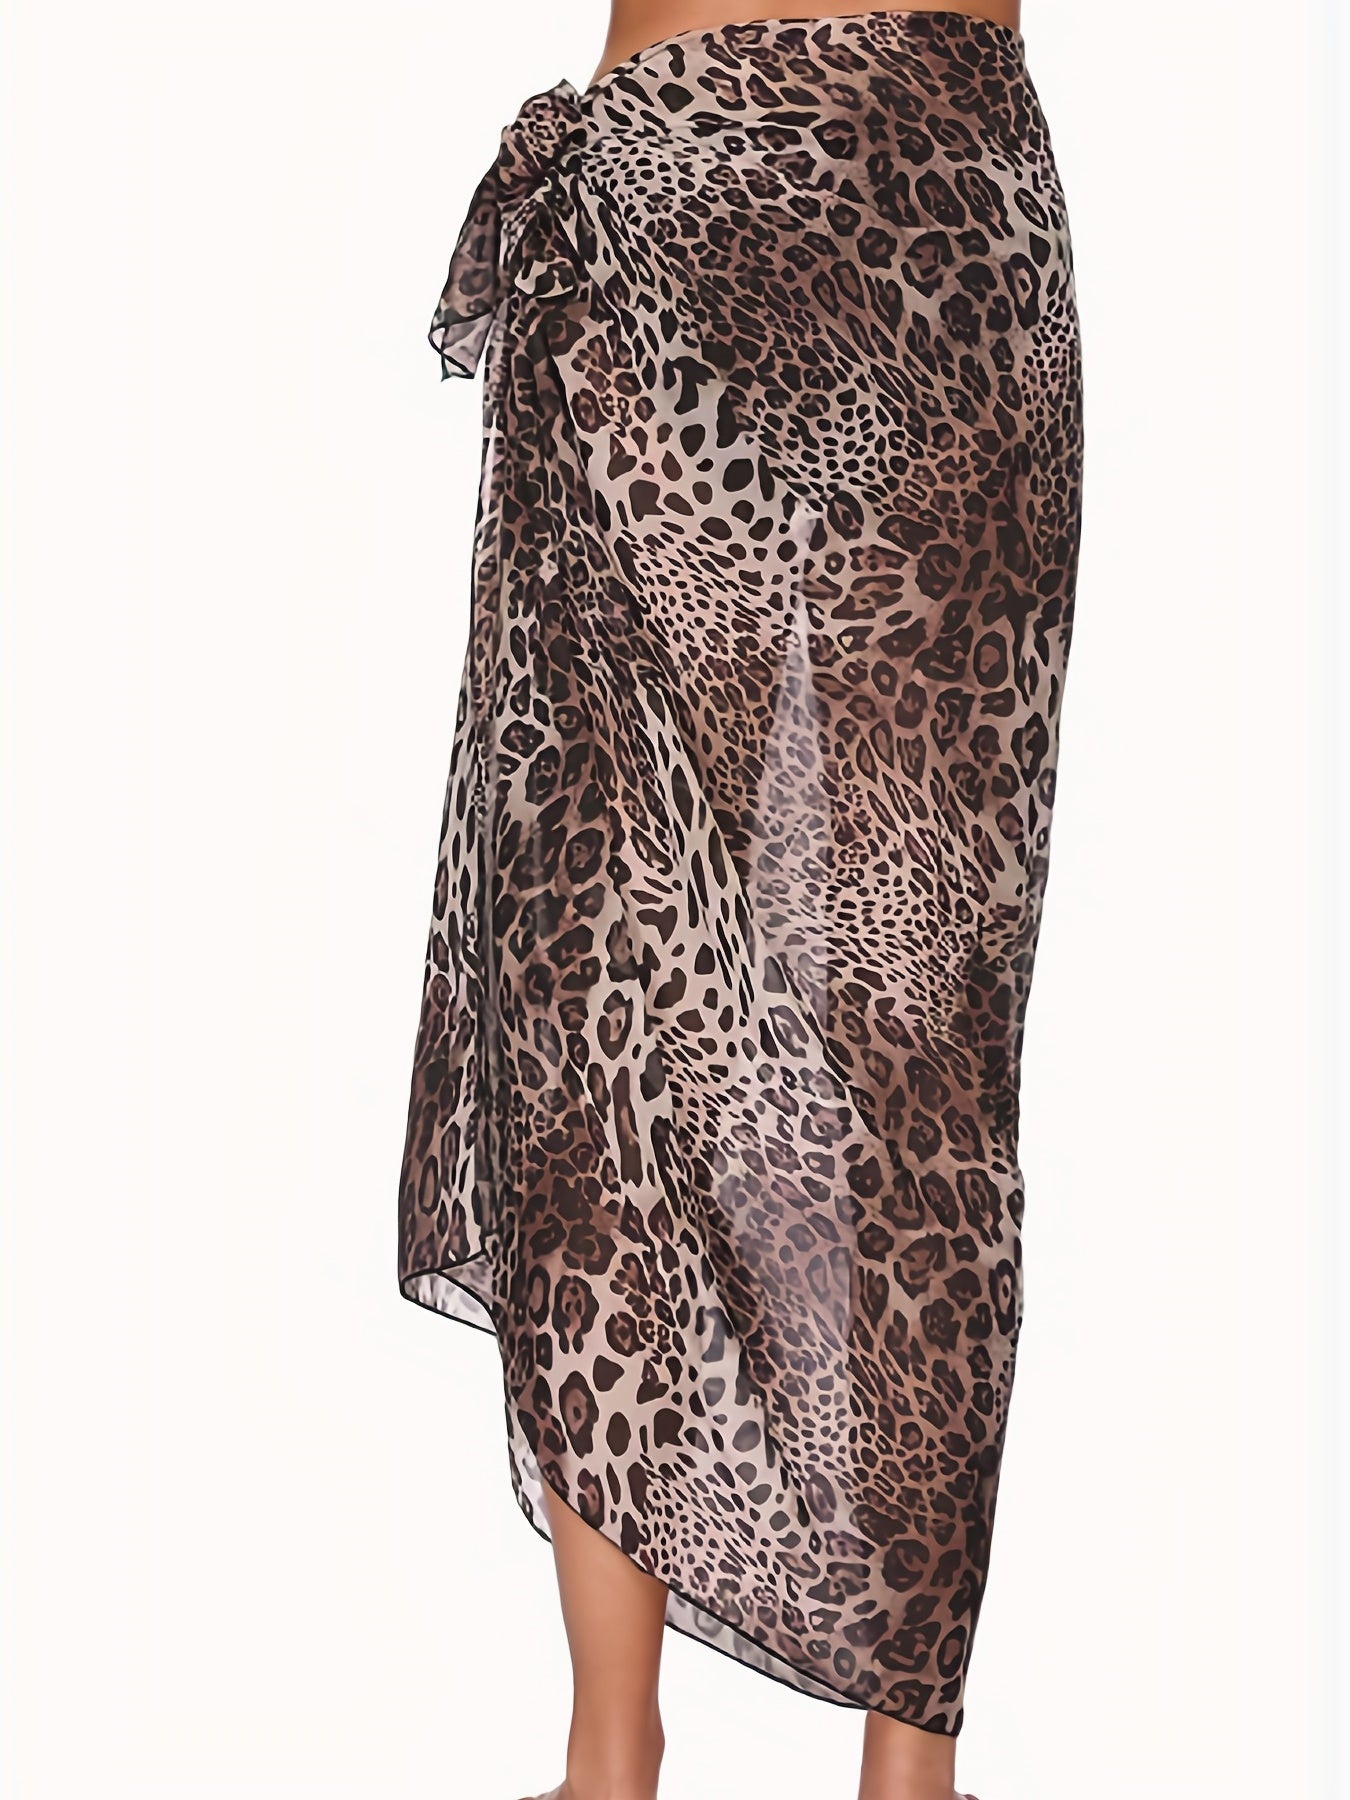 Vzyzv Leopard Print Cover Up Chiffon Skirt, Sexy Beach Wear Skirt, Women's Clothing